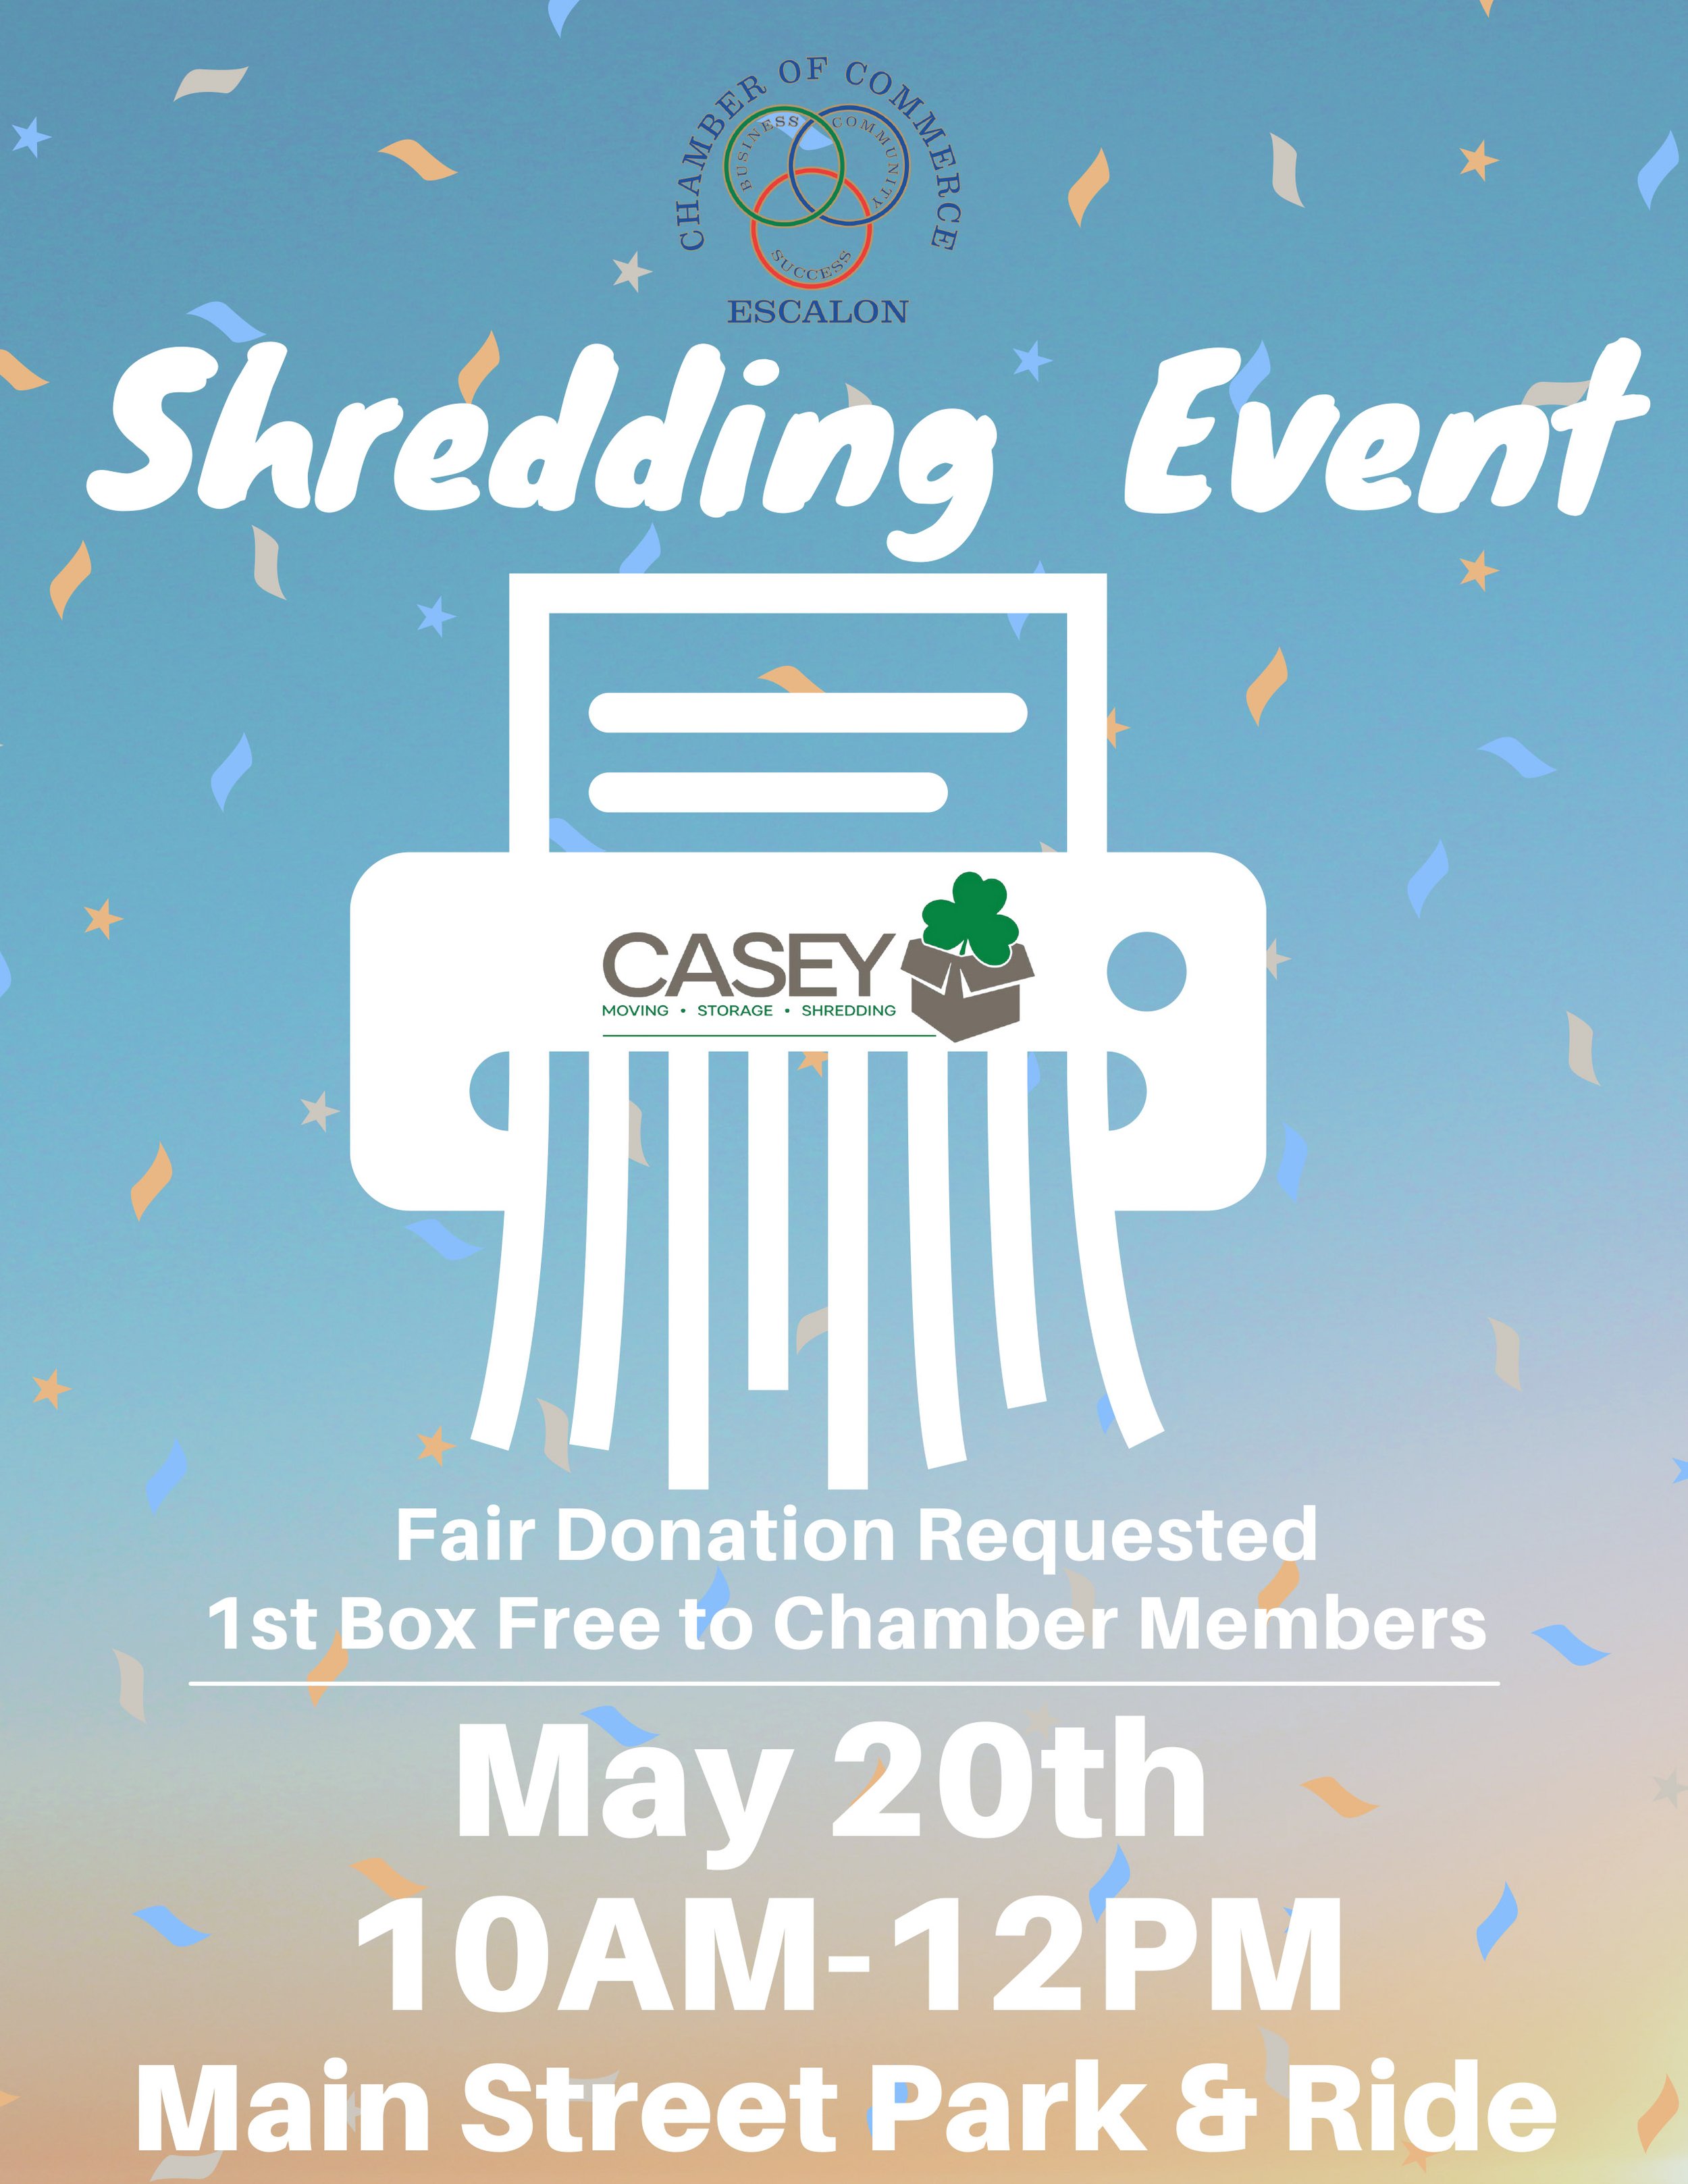 Shredding Event — Escalon Chamber of Commerce